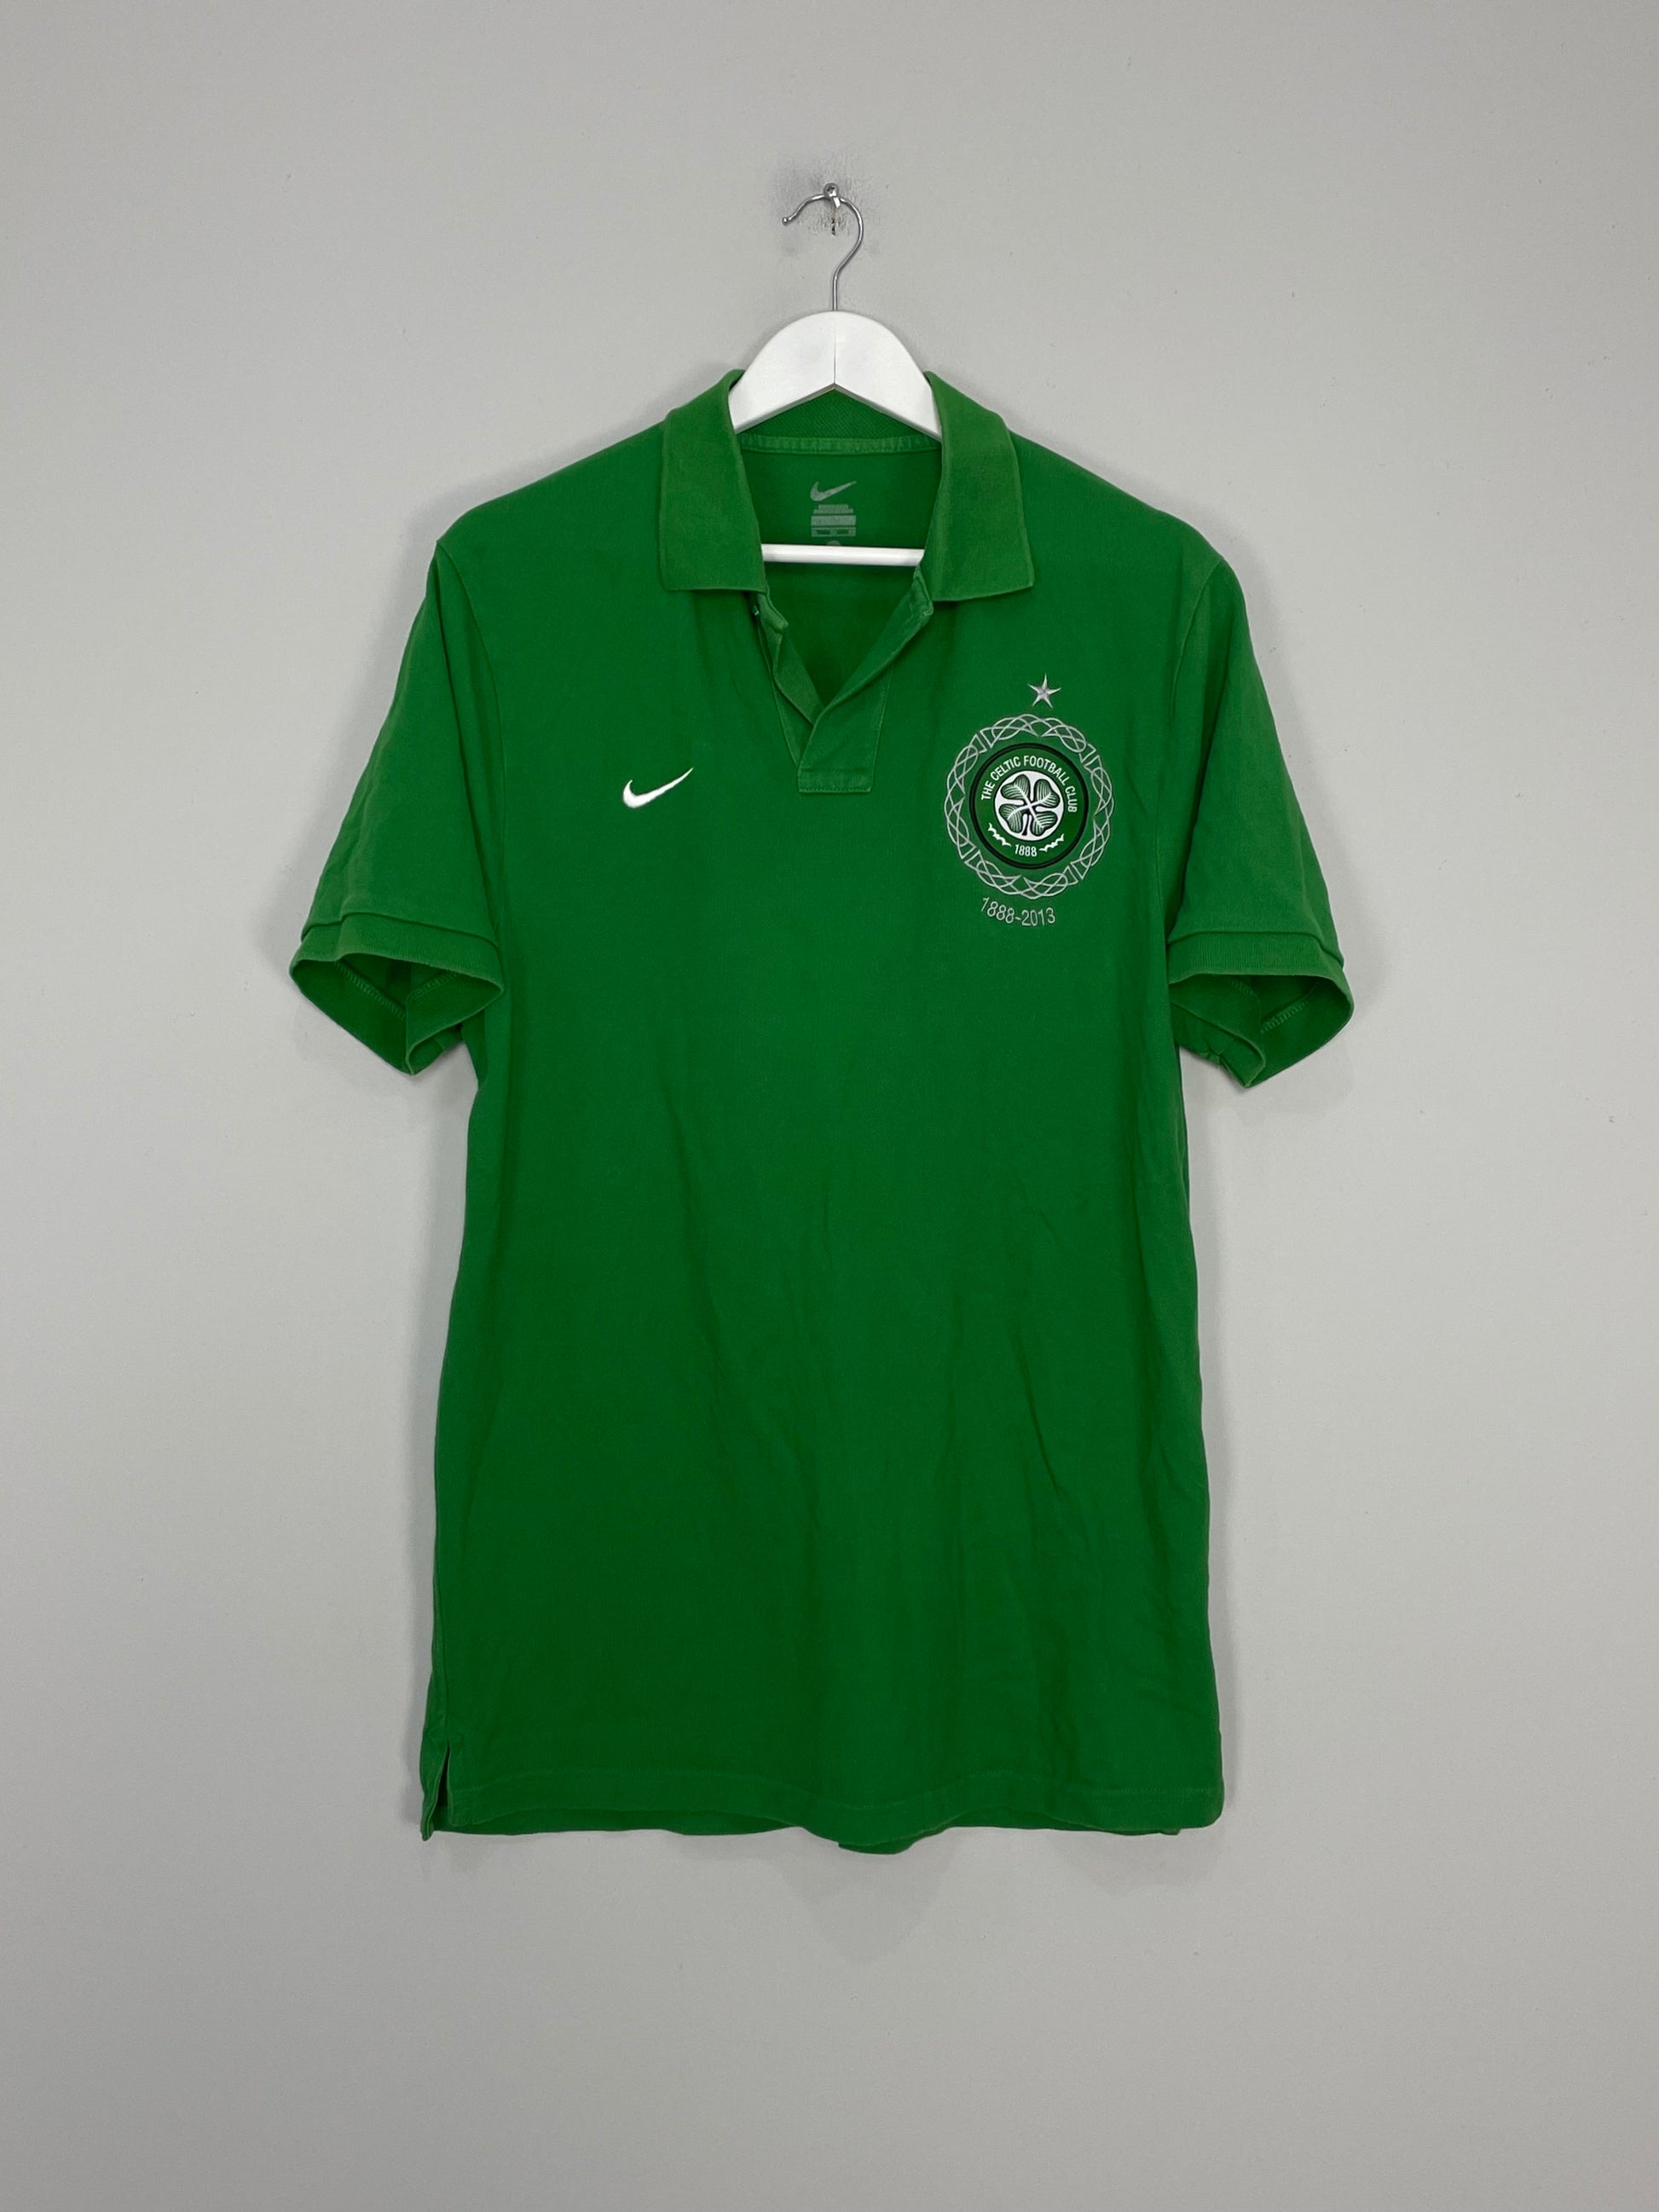 Nike Football Shirt Celtic 2013/14 